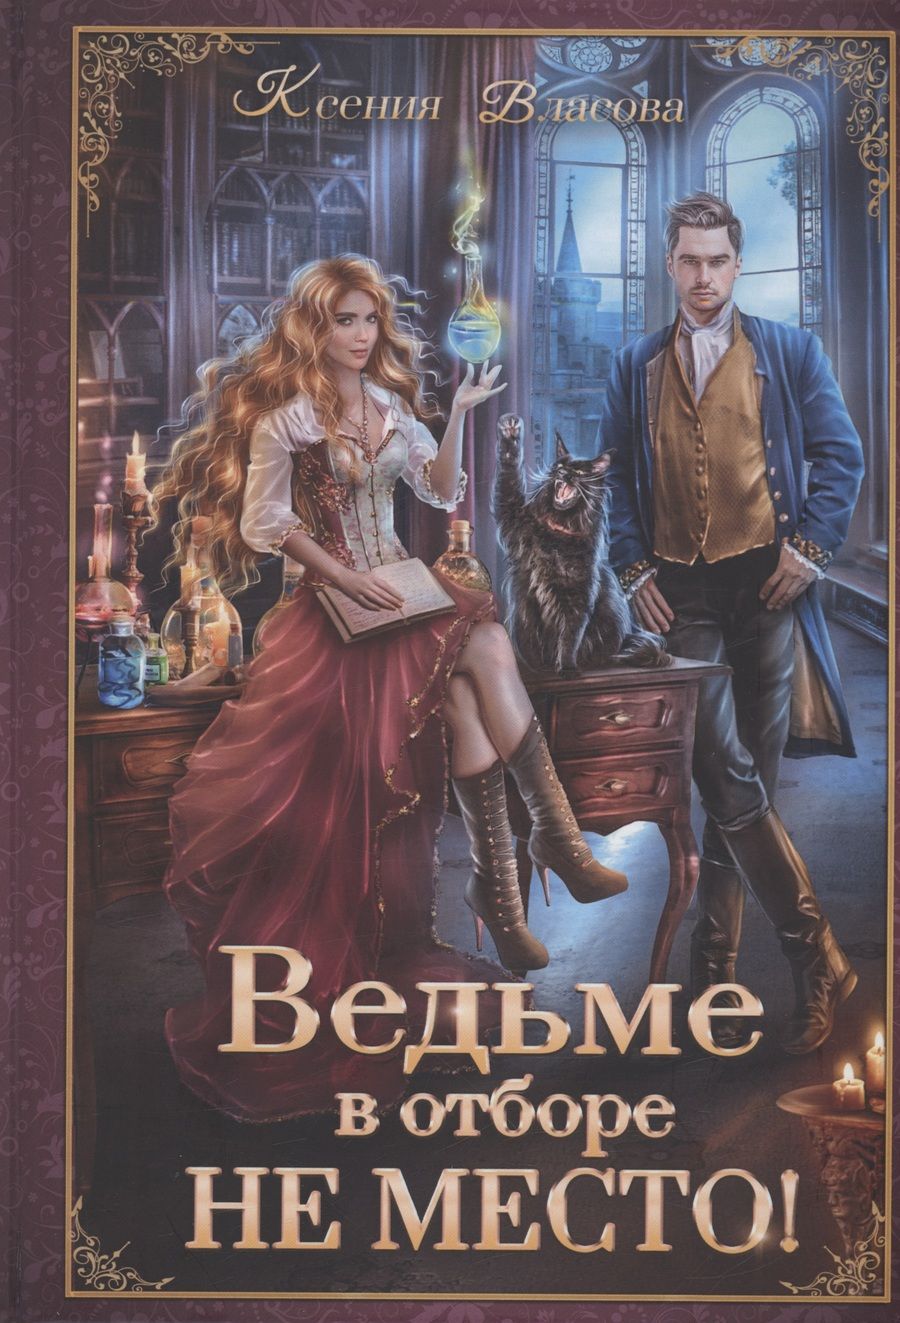 Обложка книги "Власова: Ведьме в отборе не место!"